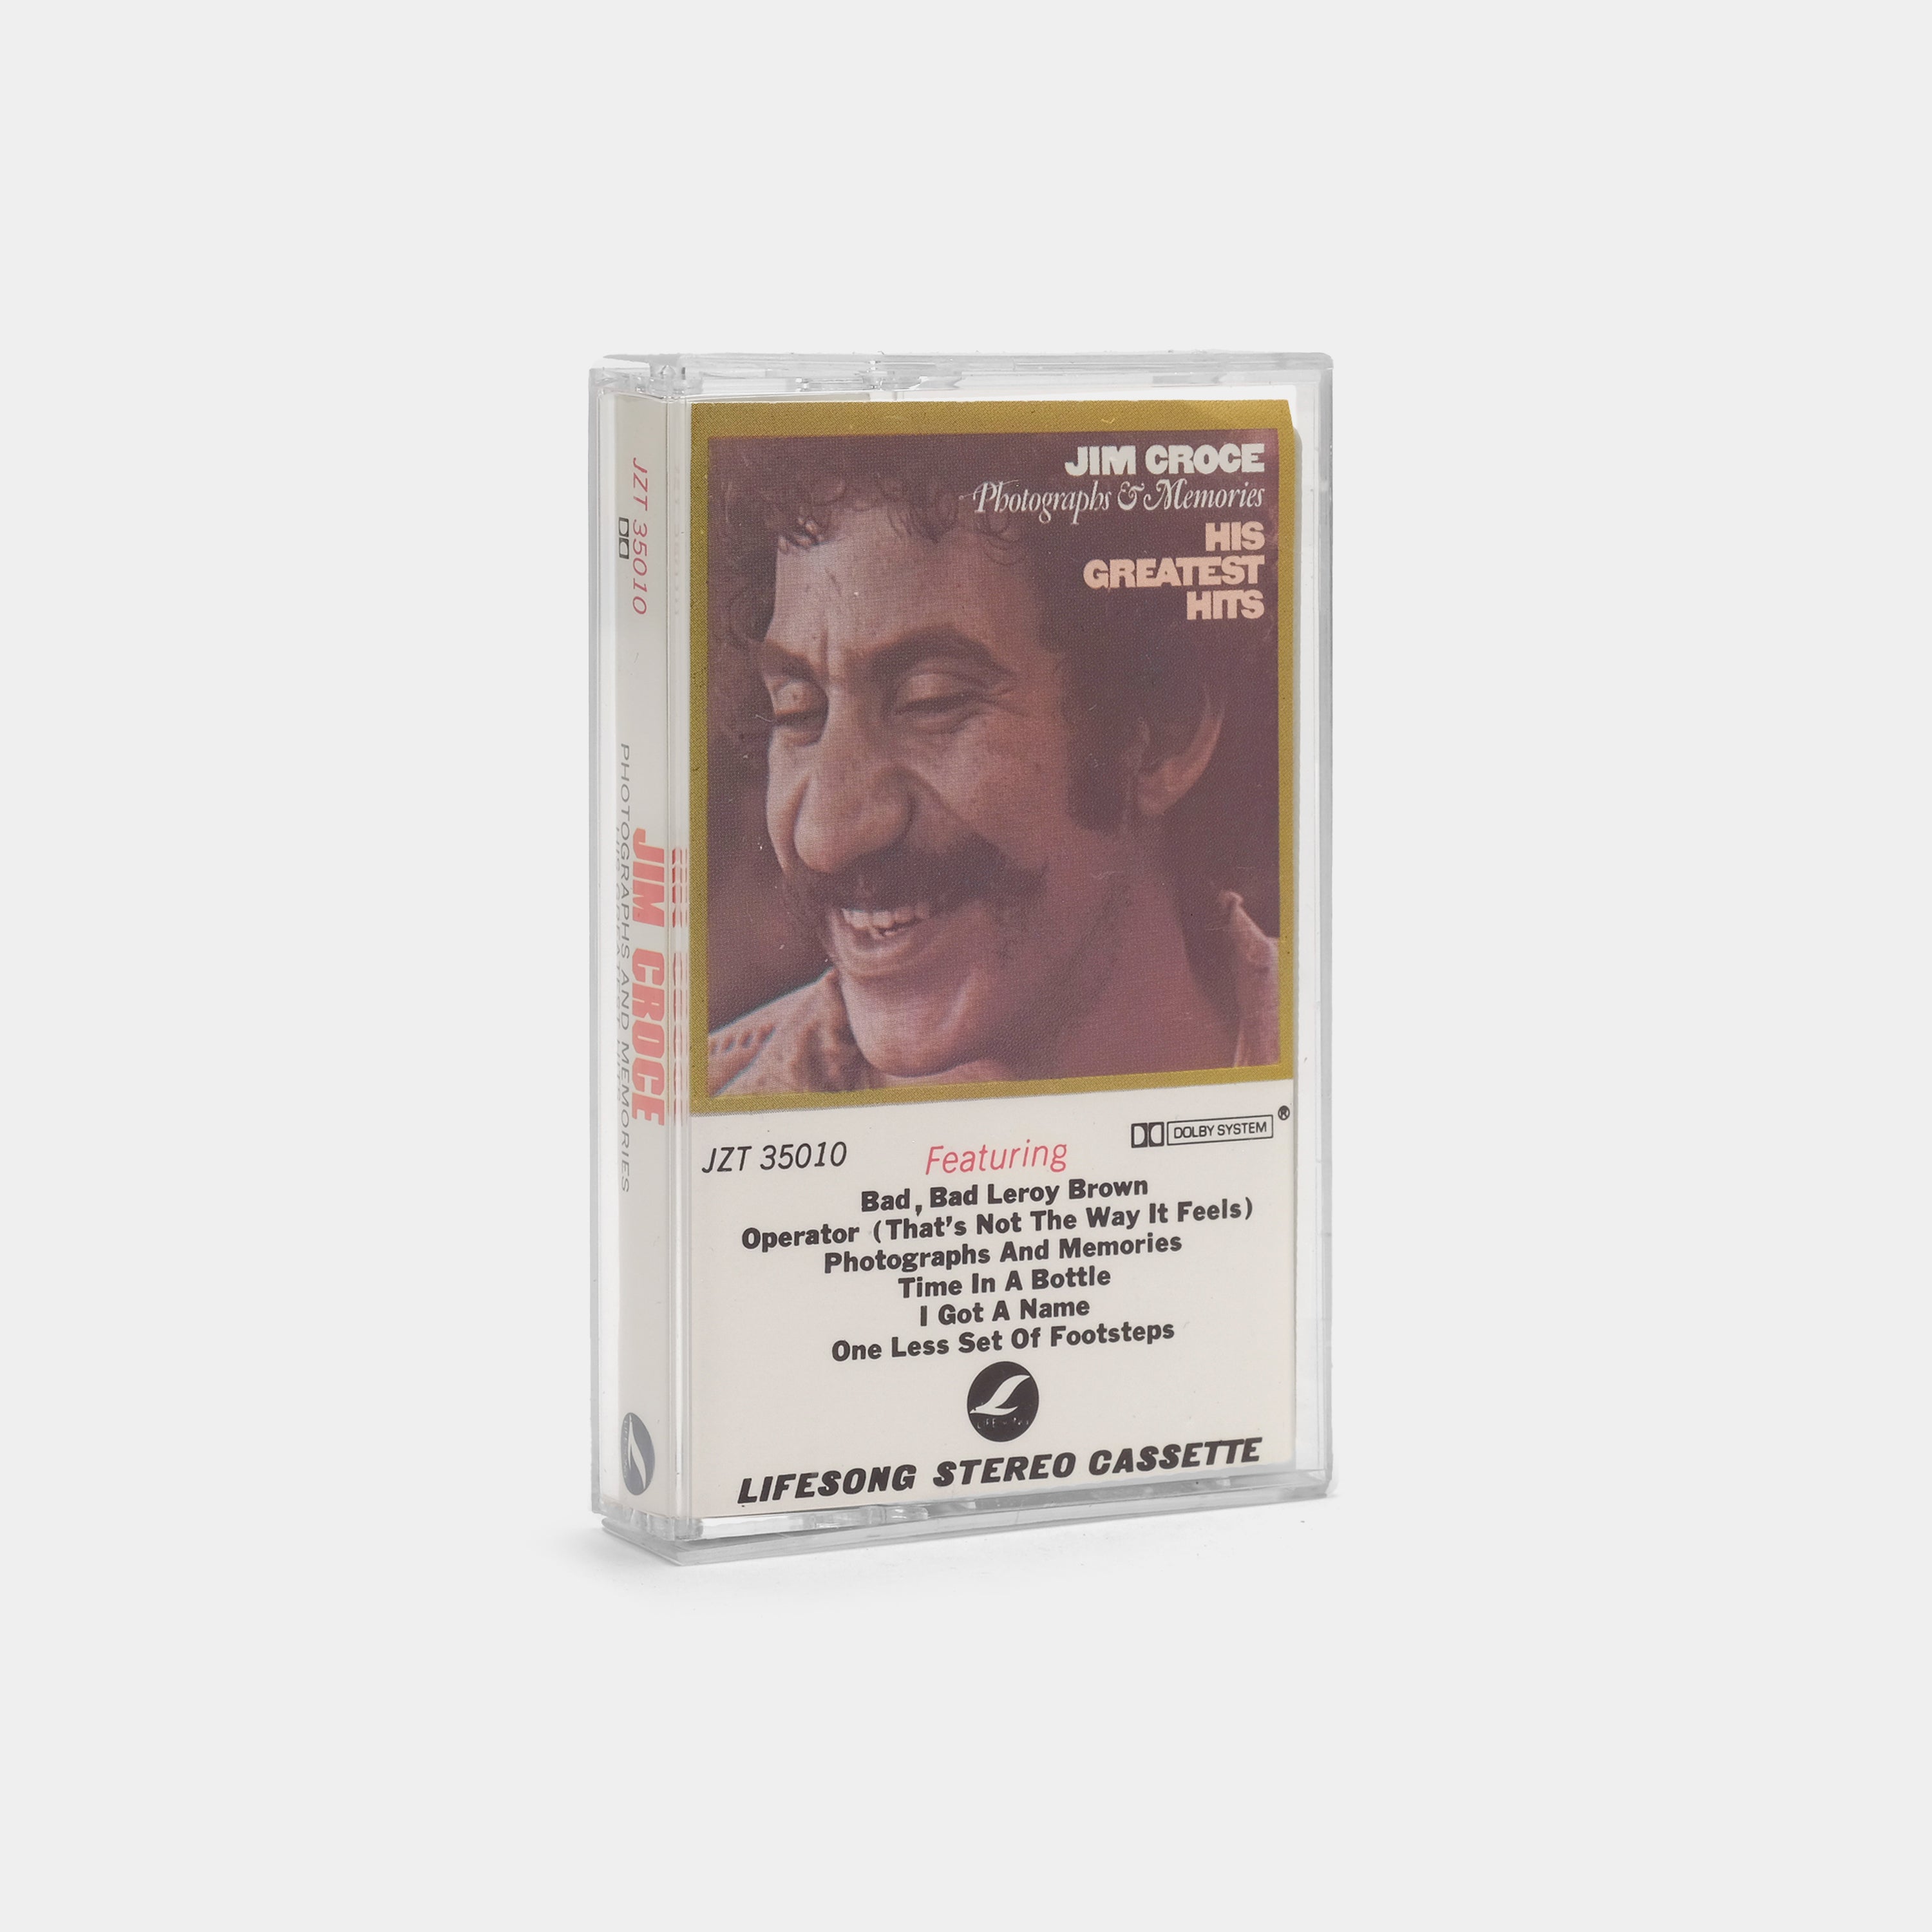 Jim Croce - Photographs & Memories (His Greatest Hits) 
Cassette Tape